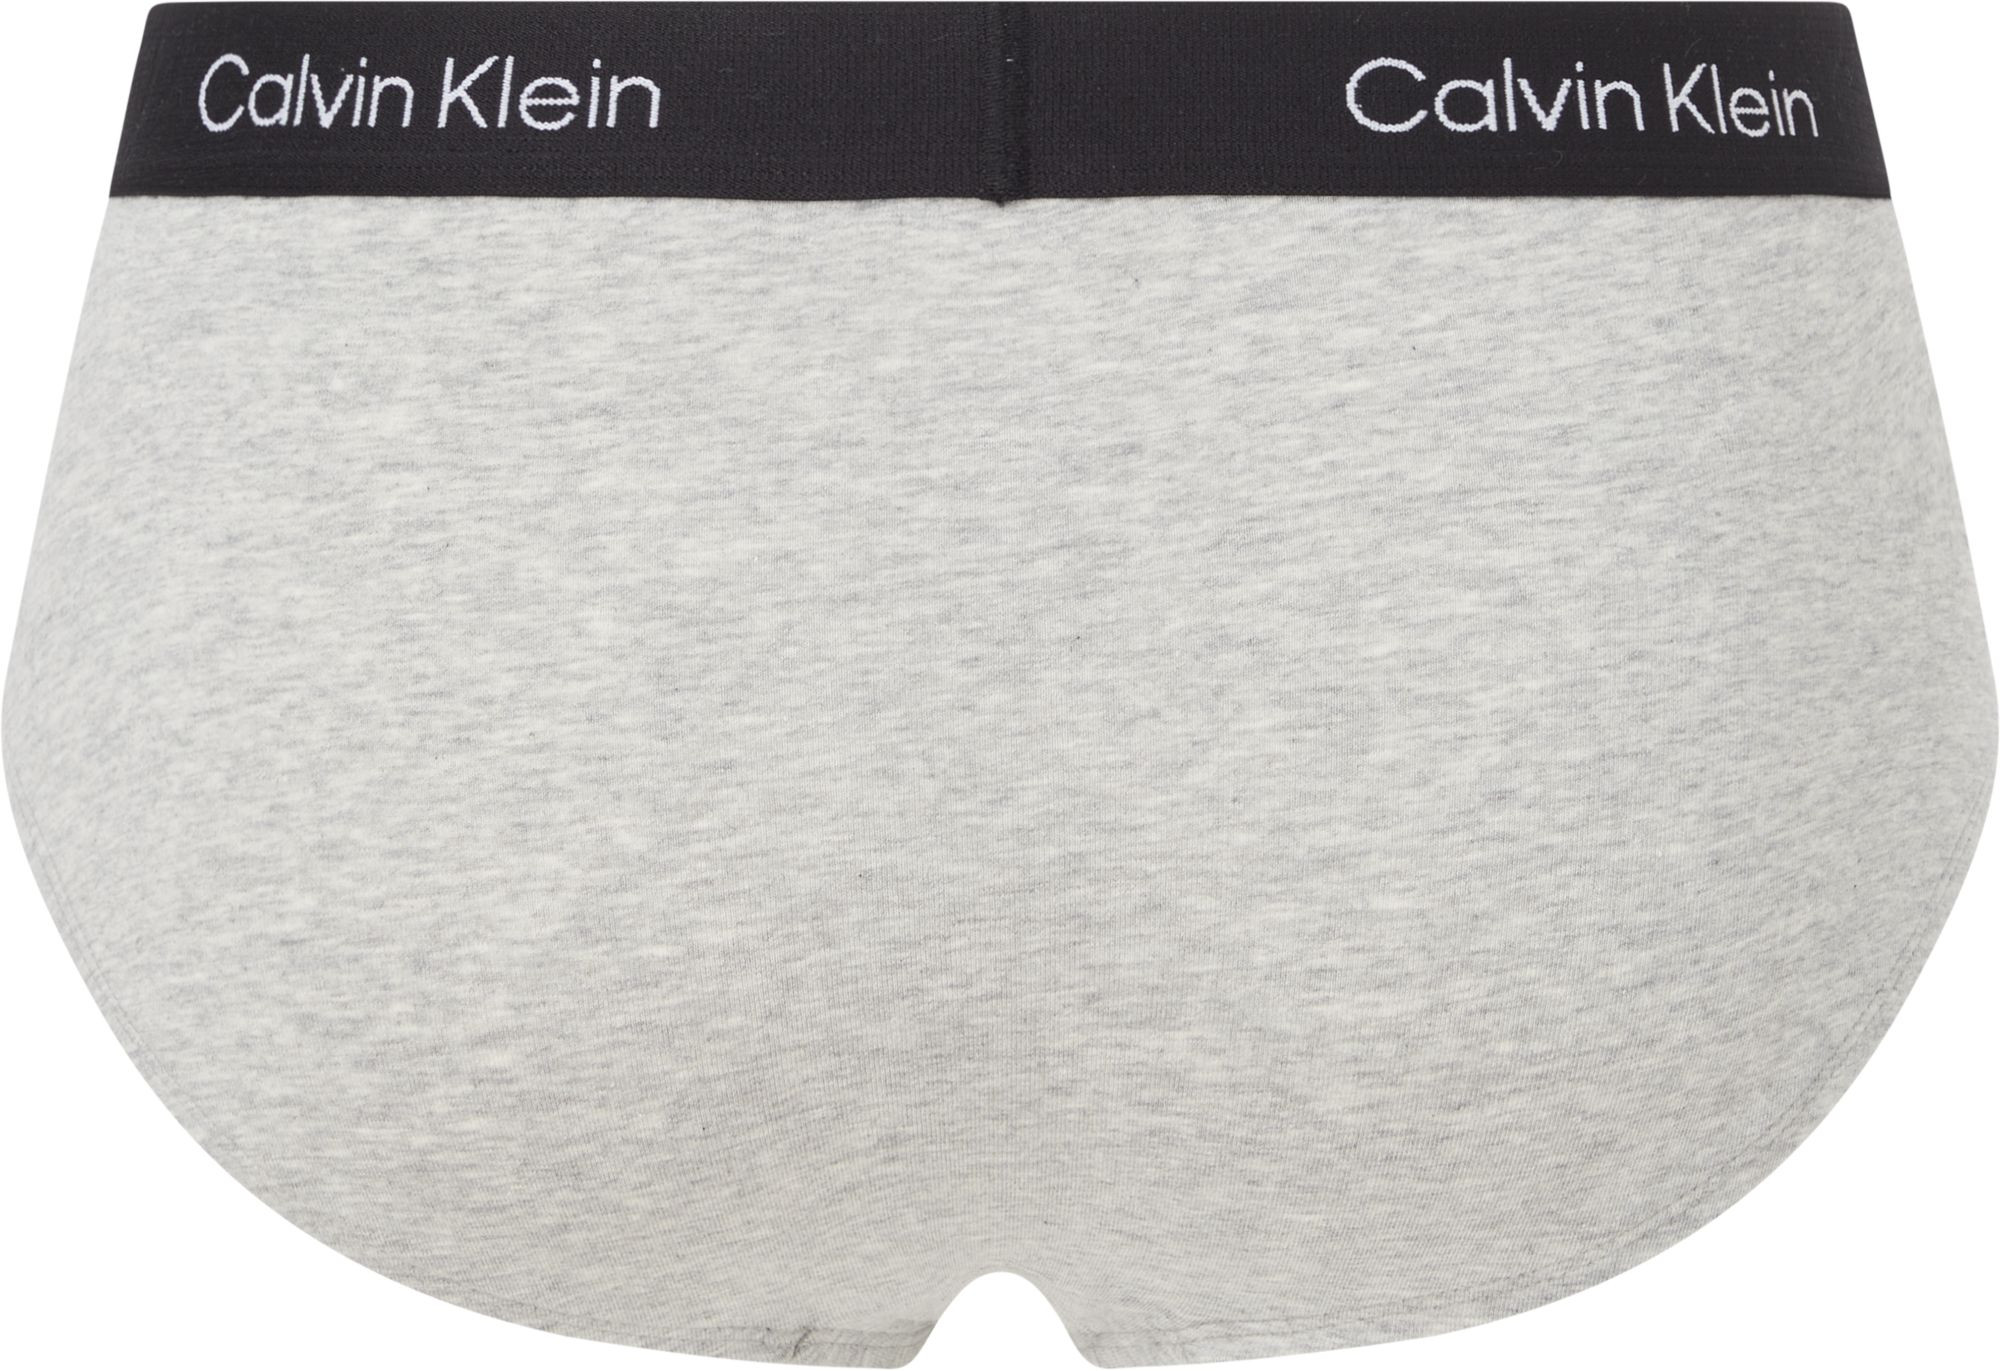 Pánské slipy 3 Pack Briefs CK96 000NB3527A6H3 černá/bílá/šedá - Calvin Klein XS